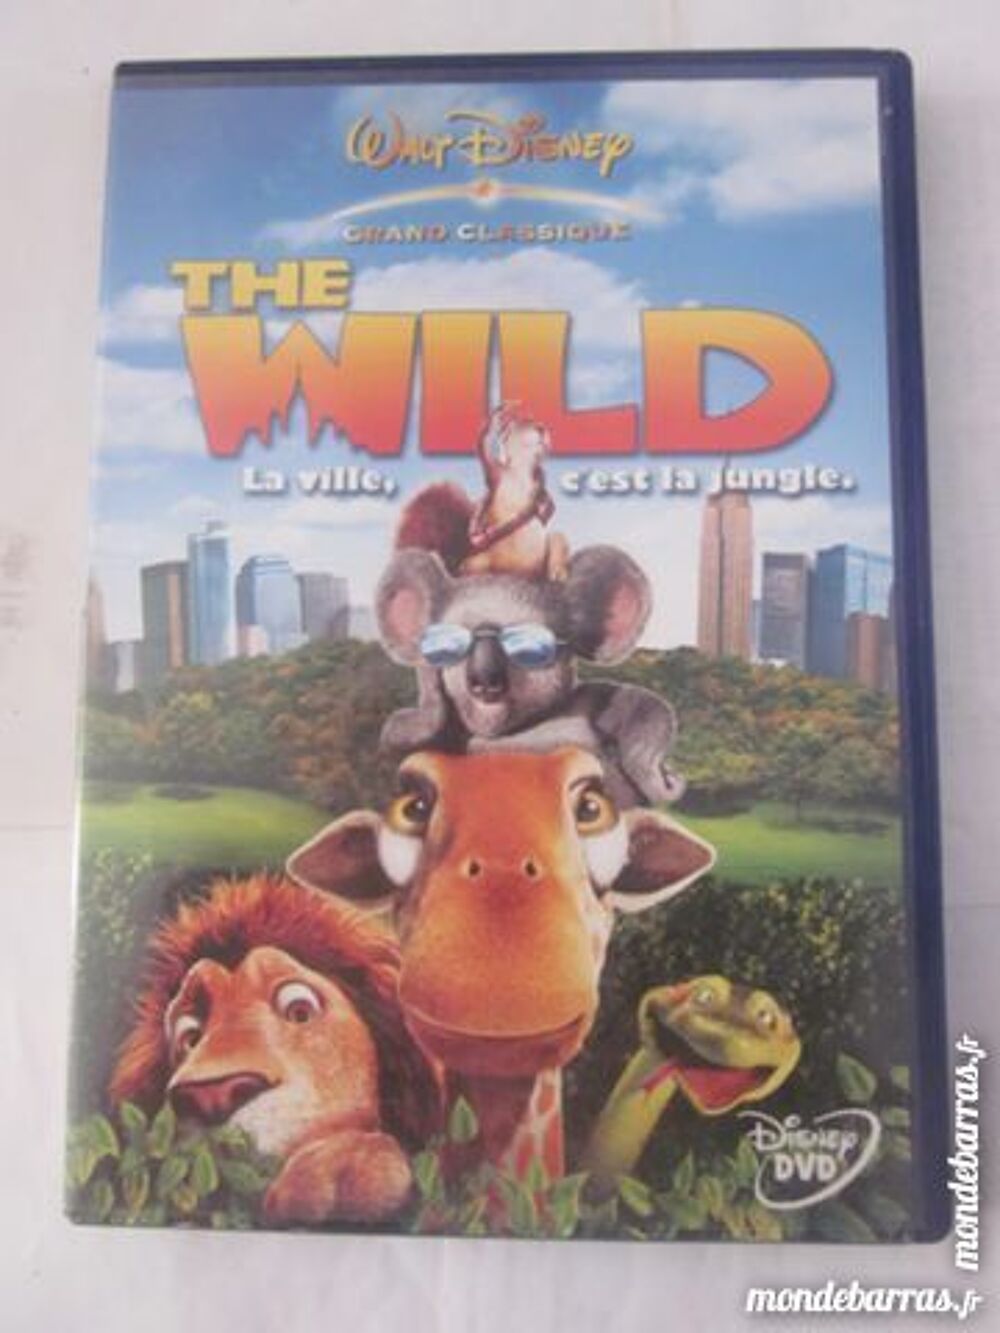 DVD DISNEY THE WILD DVD et blu-ray